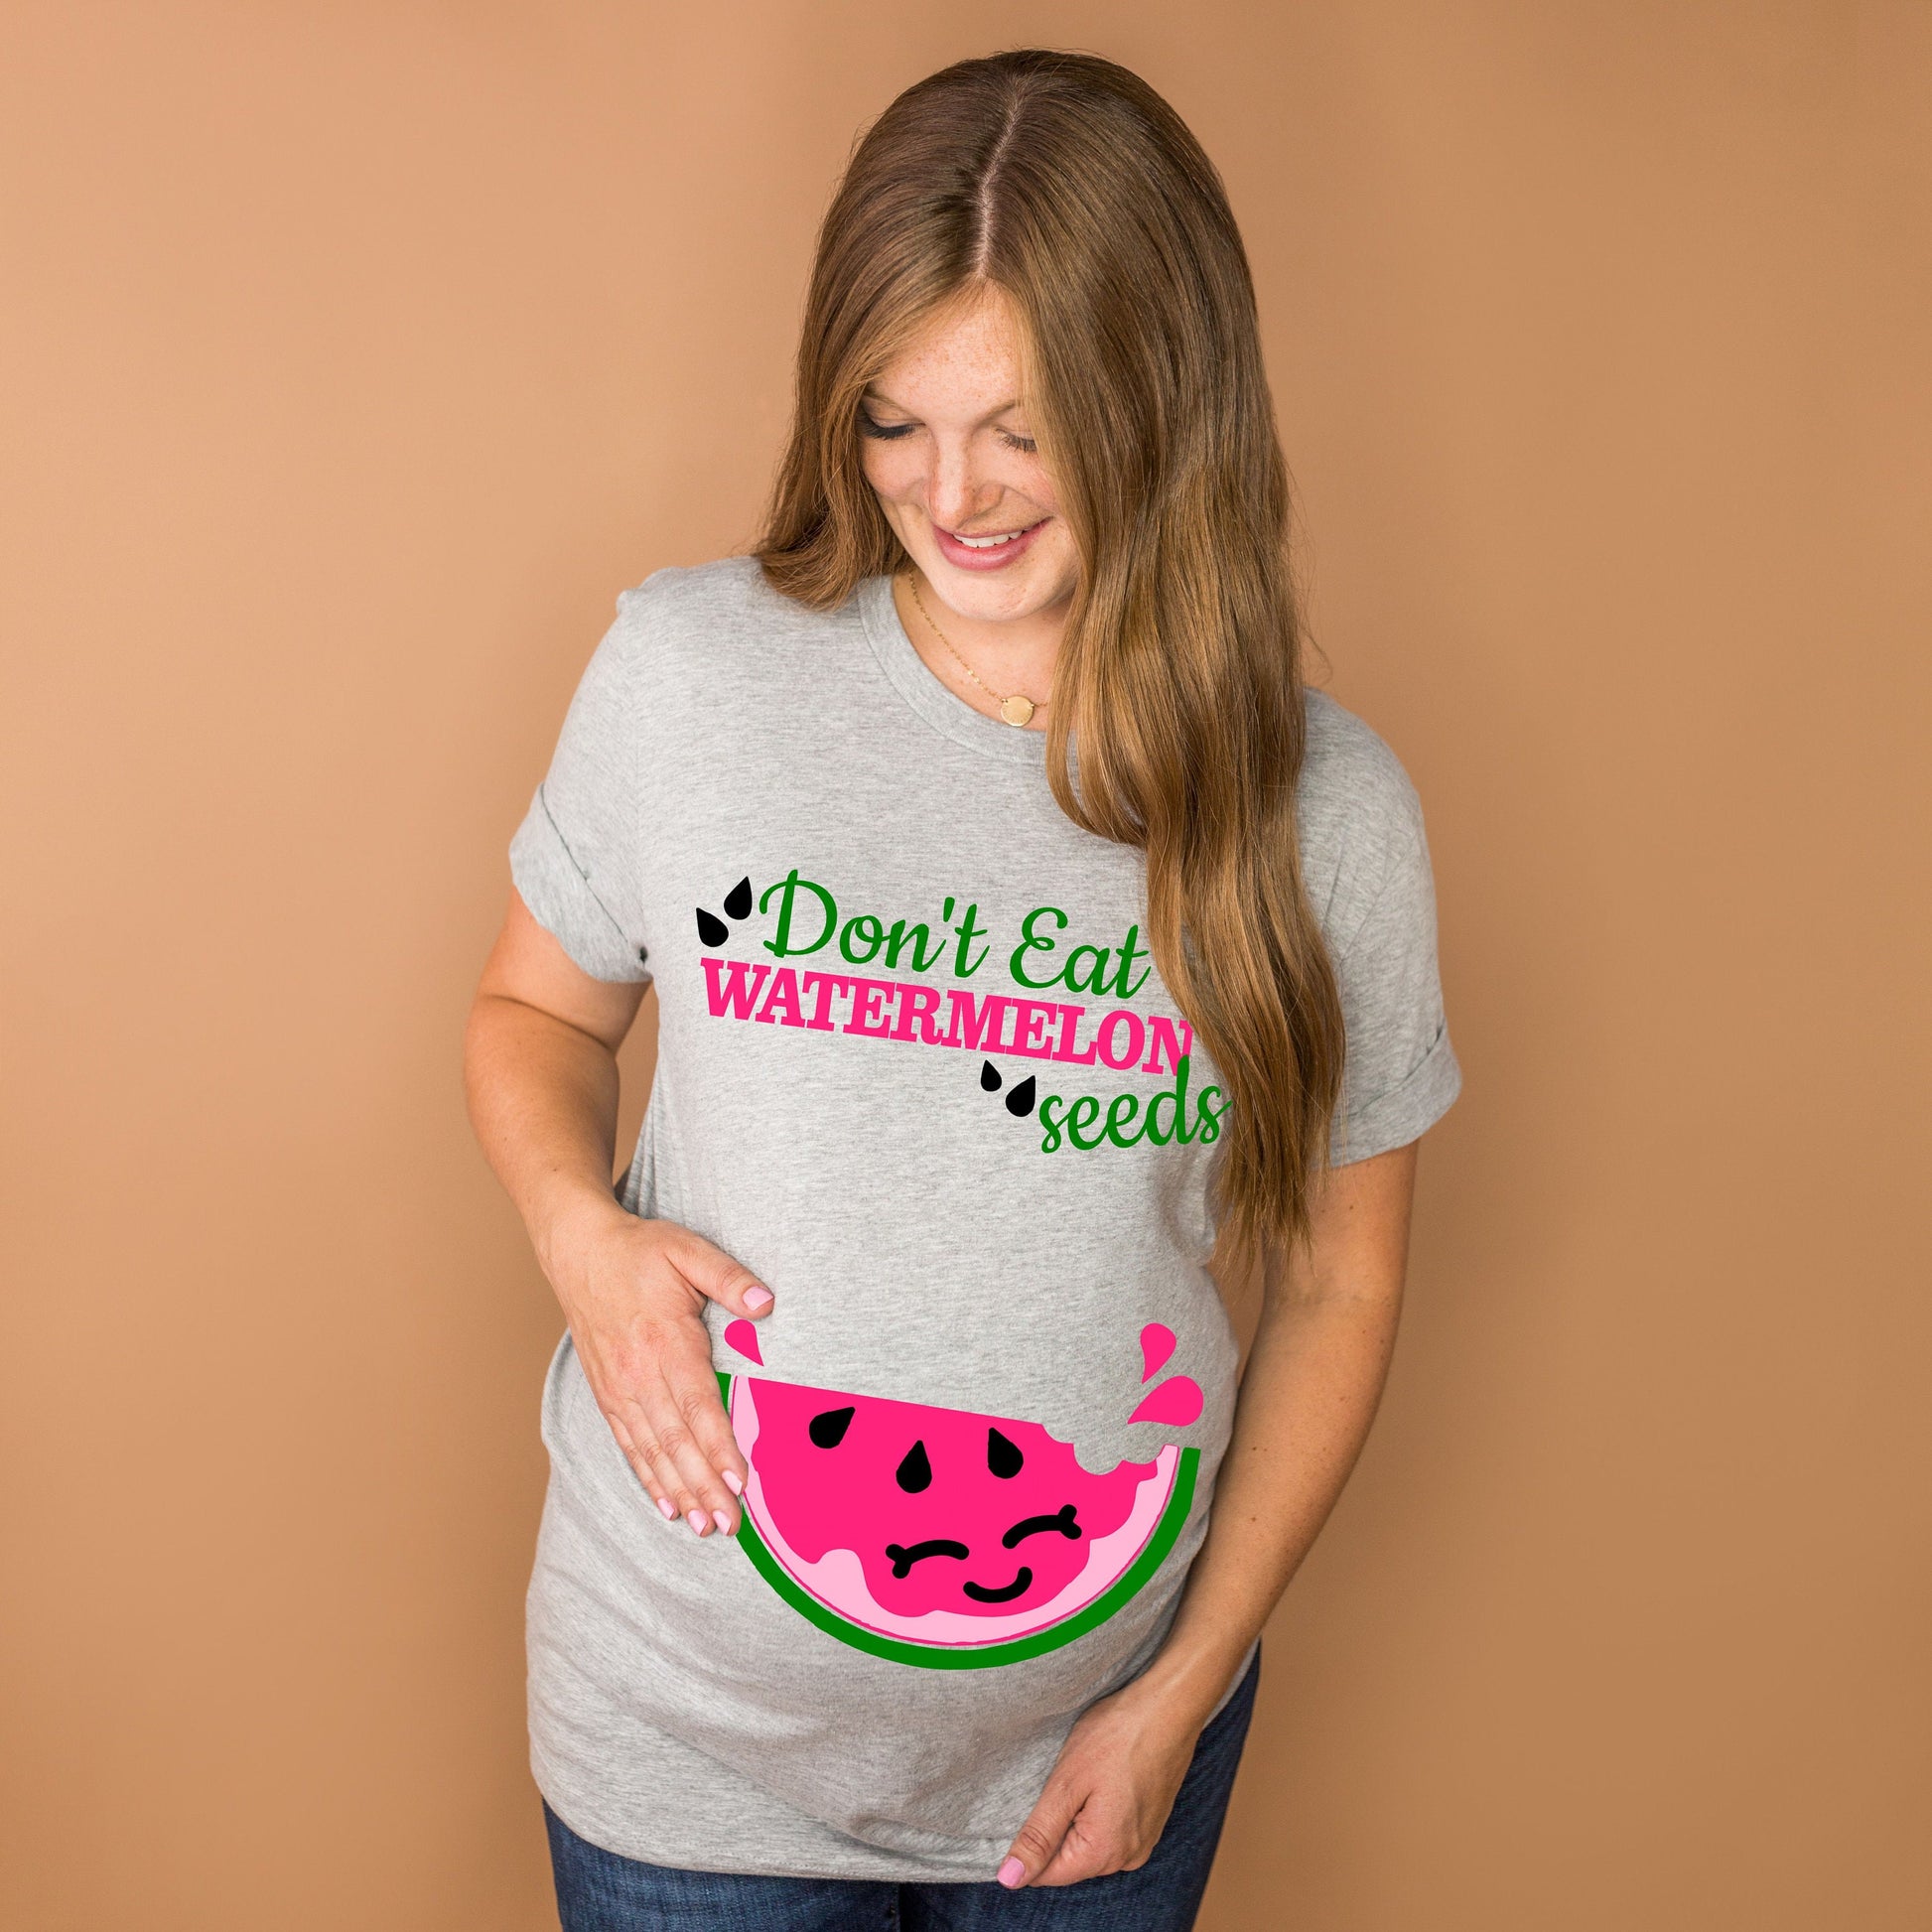 Don't Eat Watermelon Seeds t-shirt - pregnancy announcement shirt